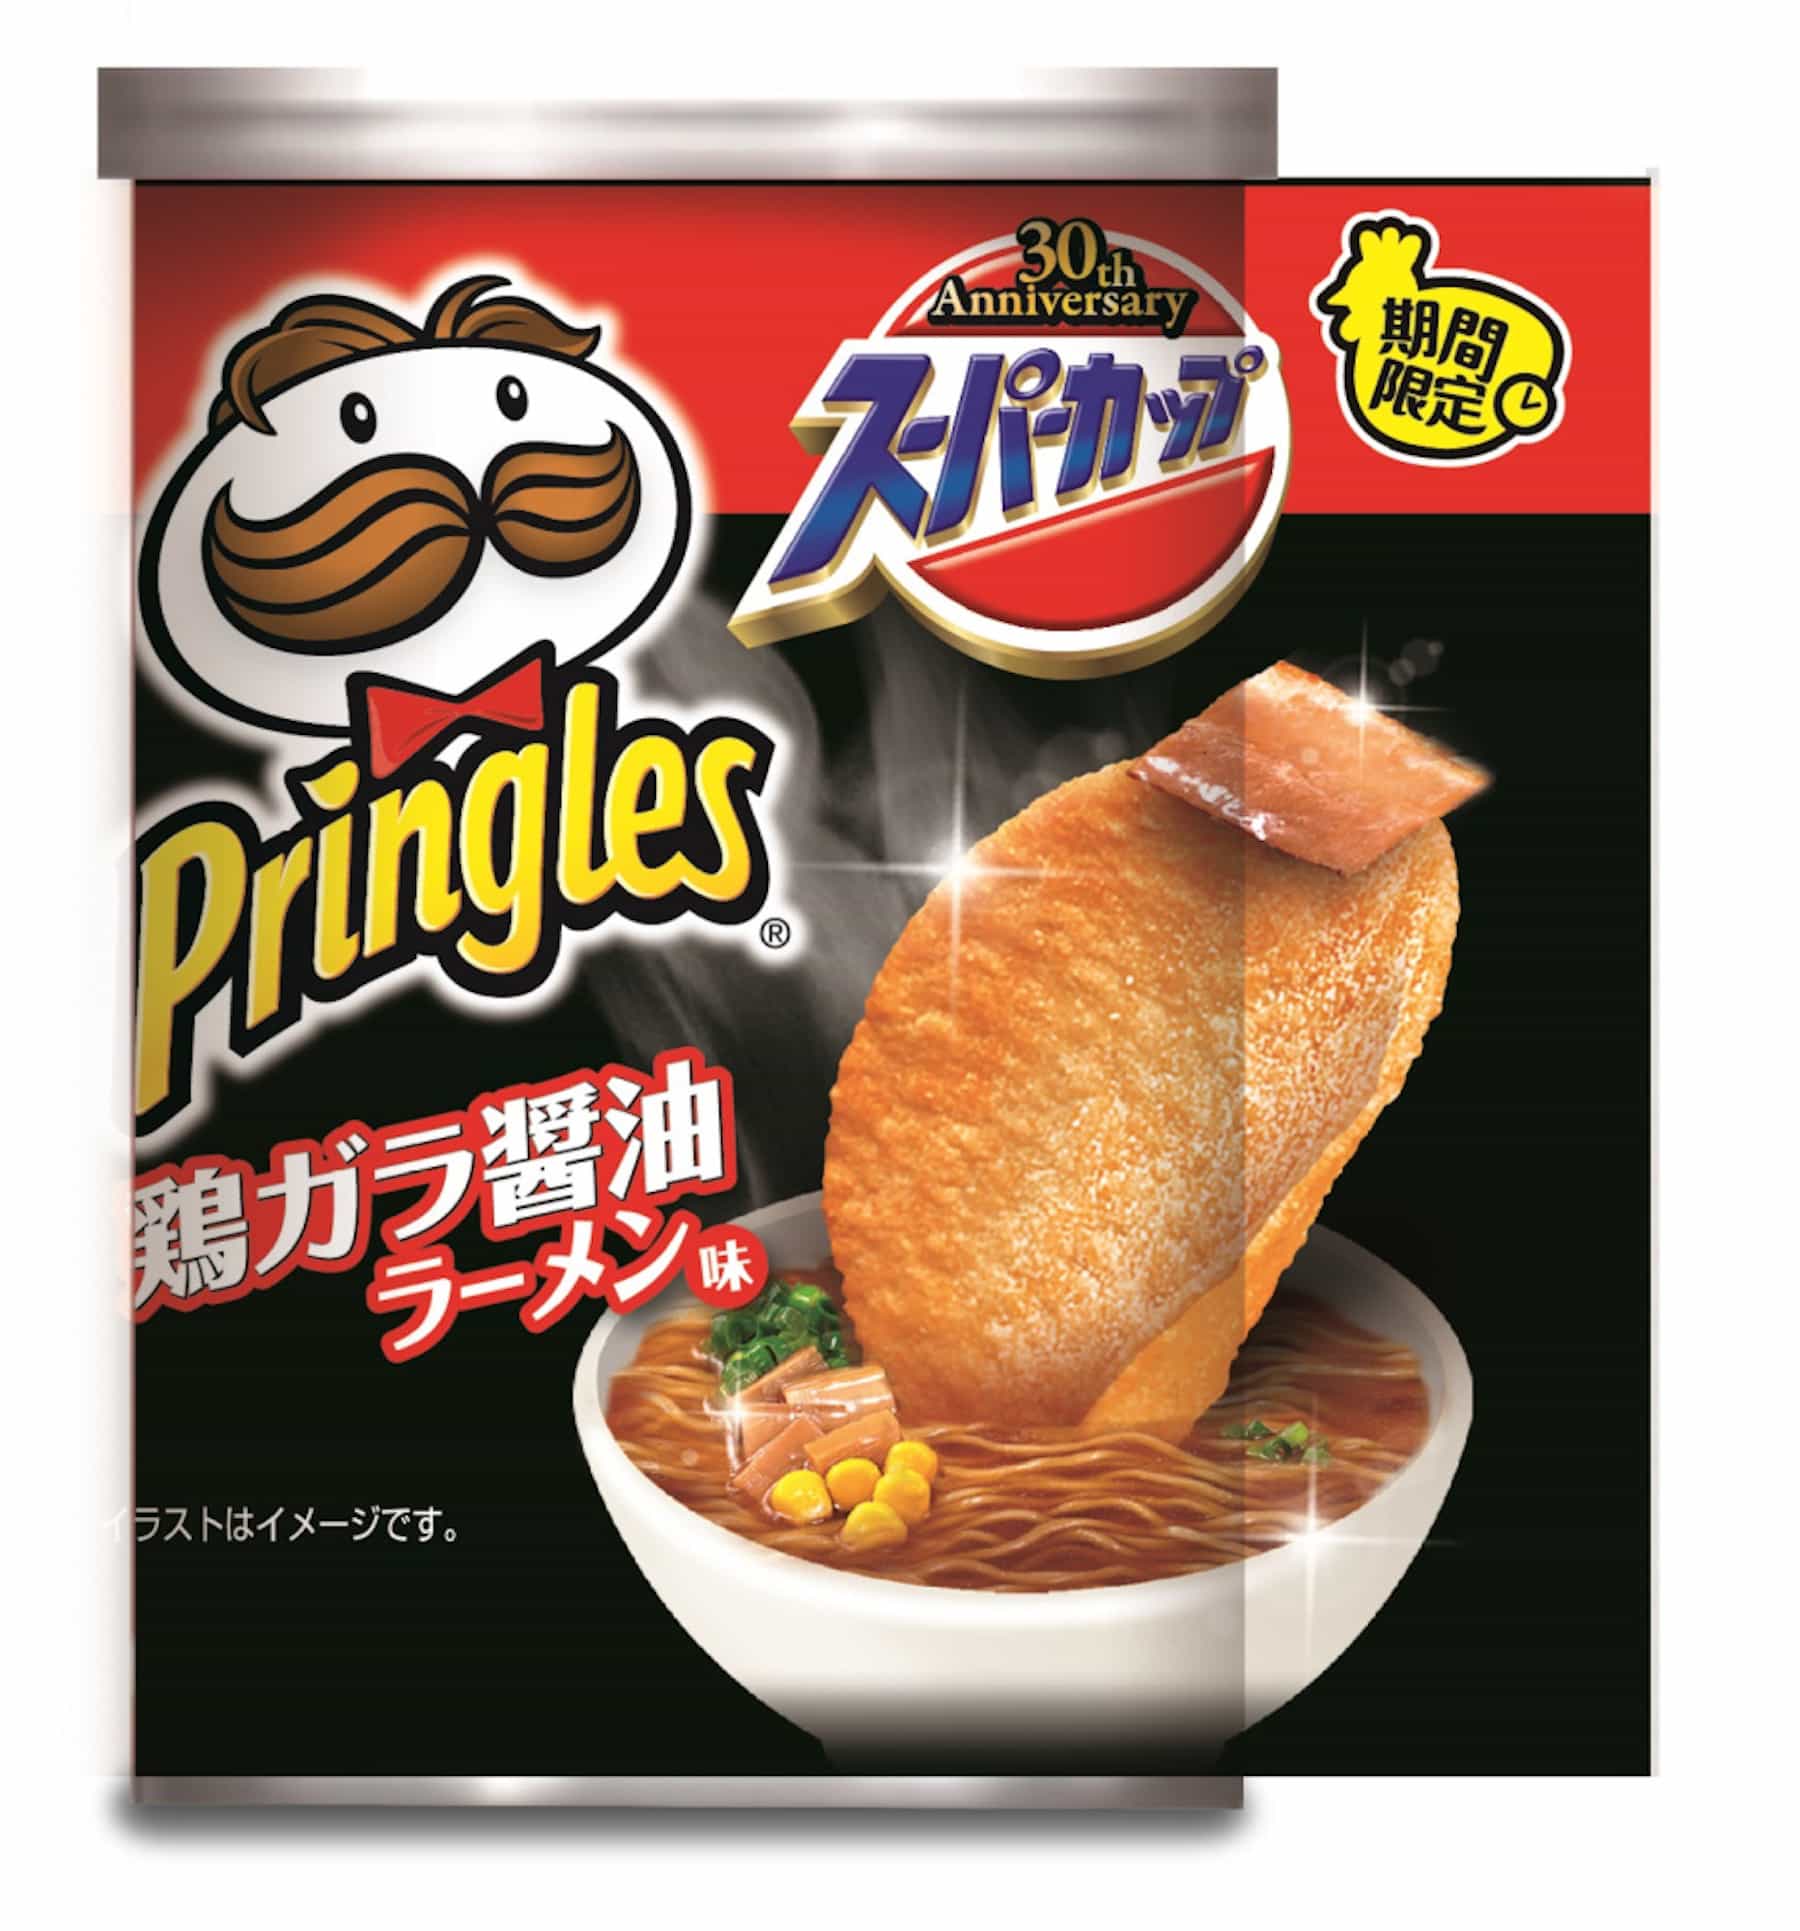 pringles-japan-super-cup-cup-noodles-japanese-instant-ramen-5